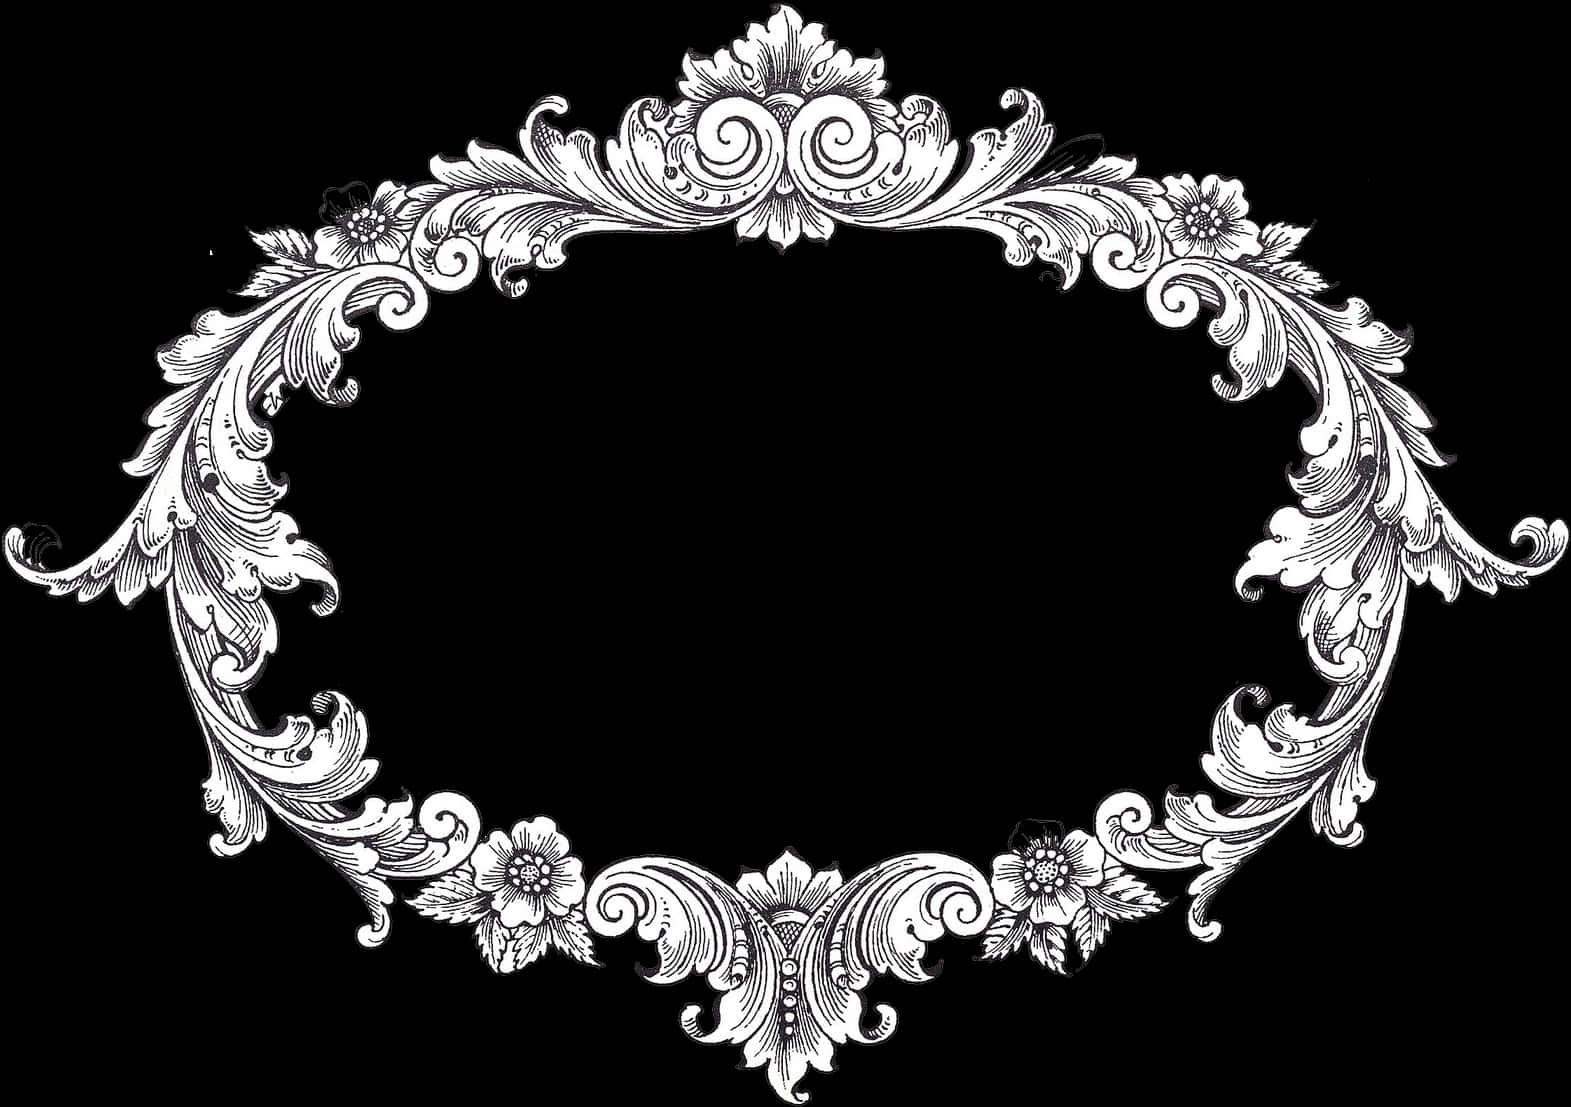 A White And Black Ornate Frame